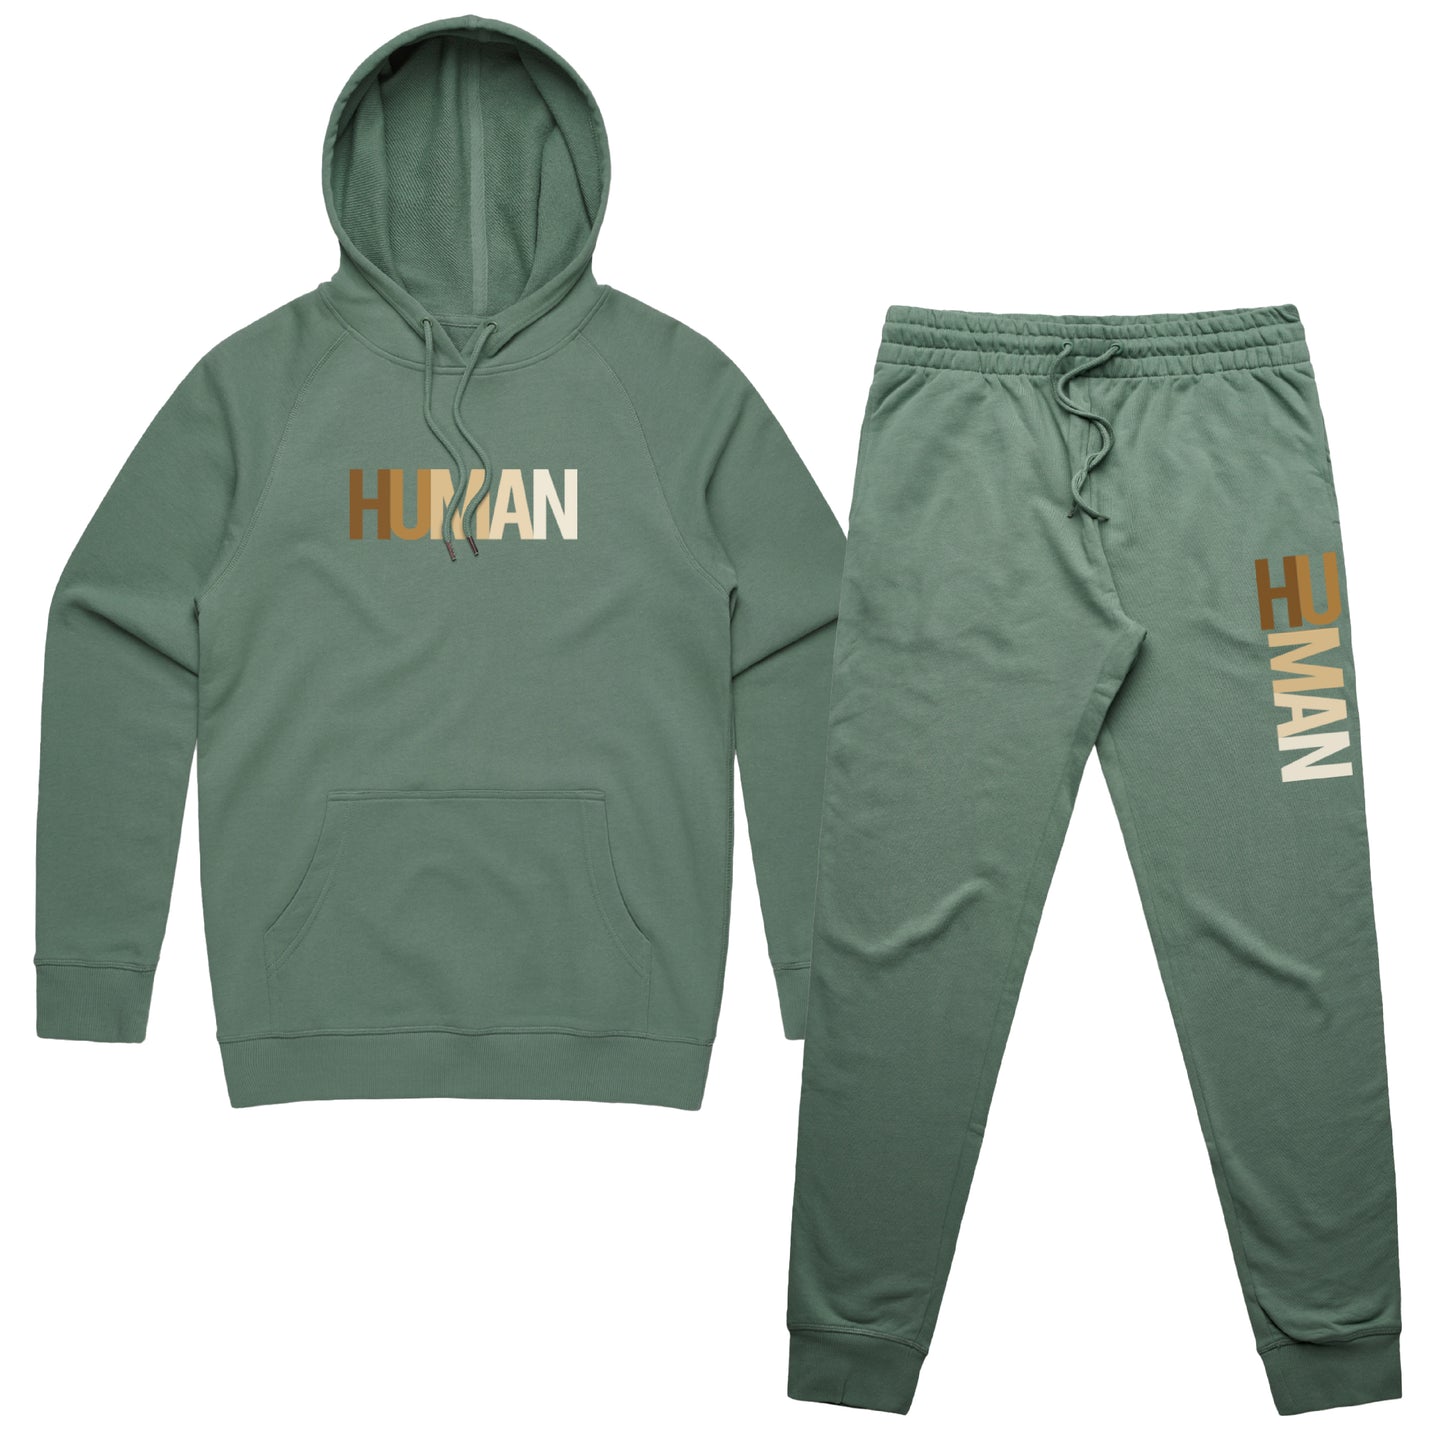 Human Premium Sweatsuit Set